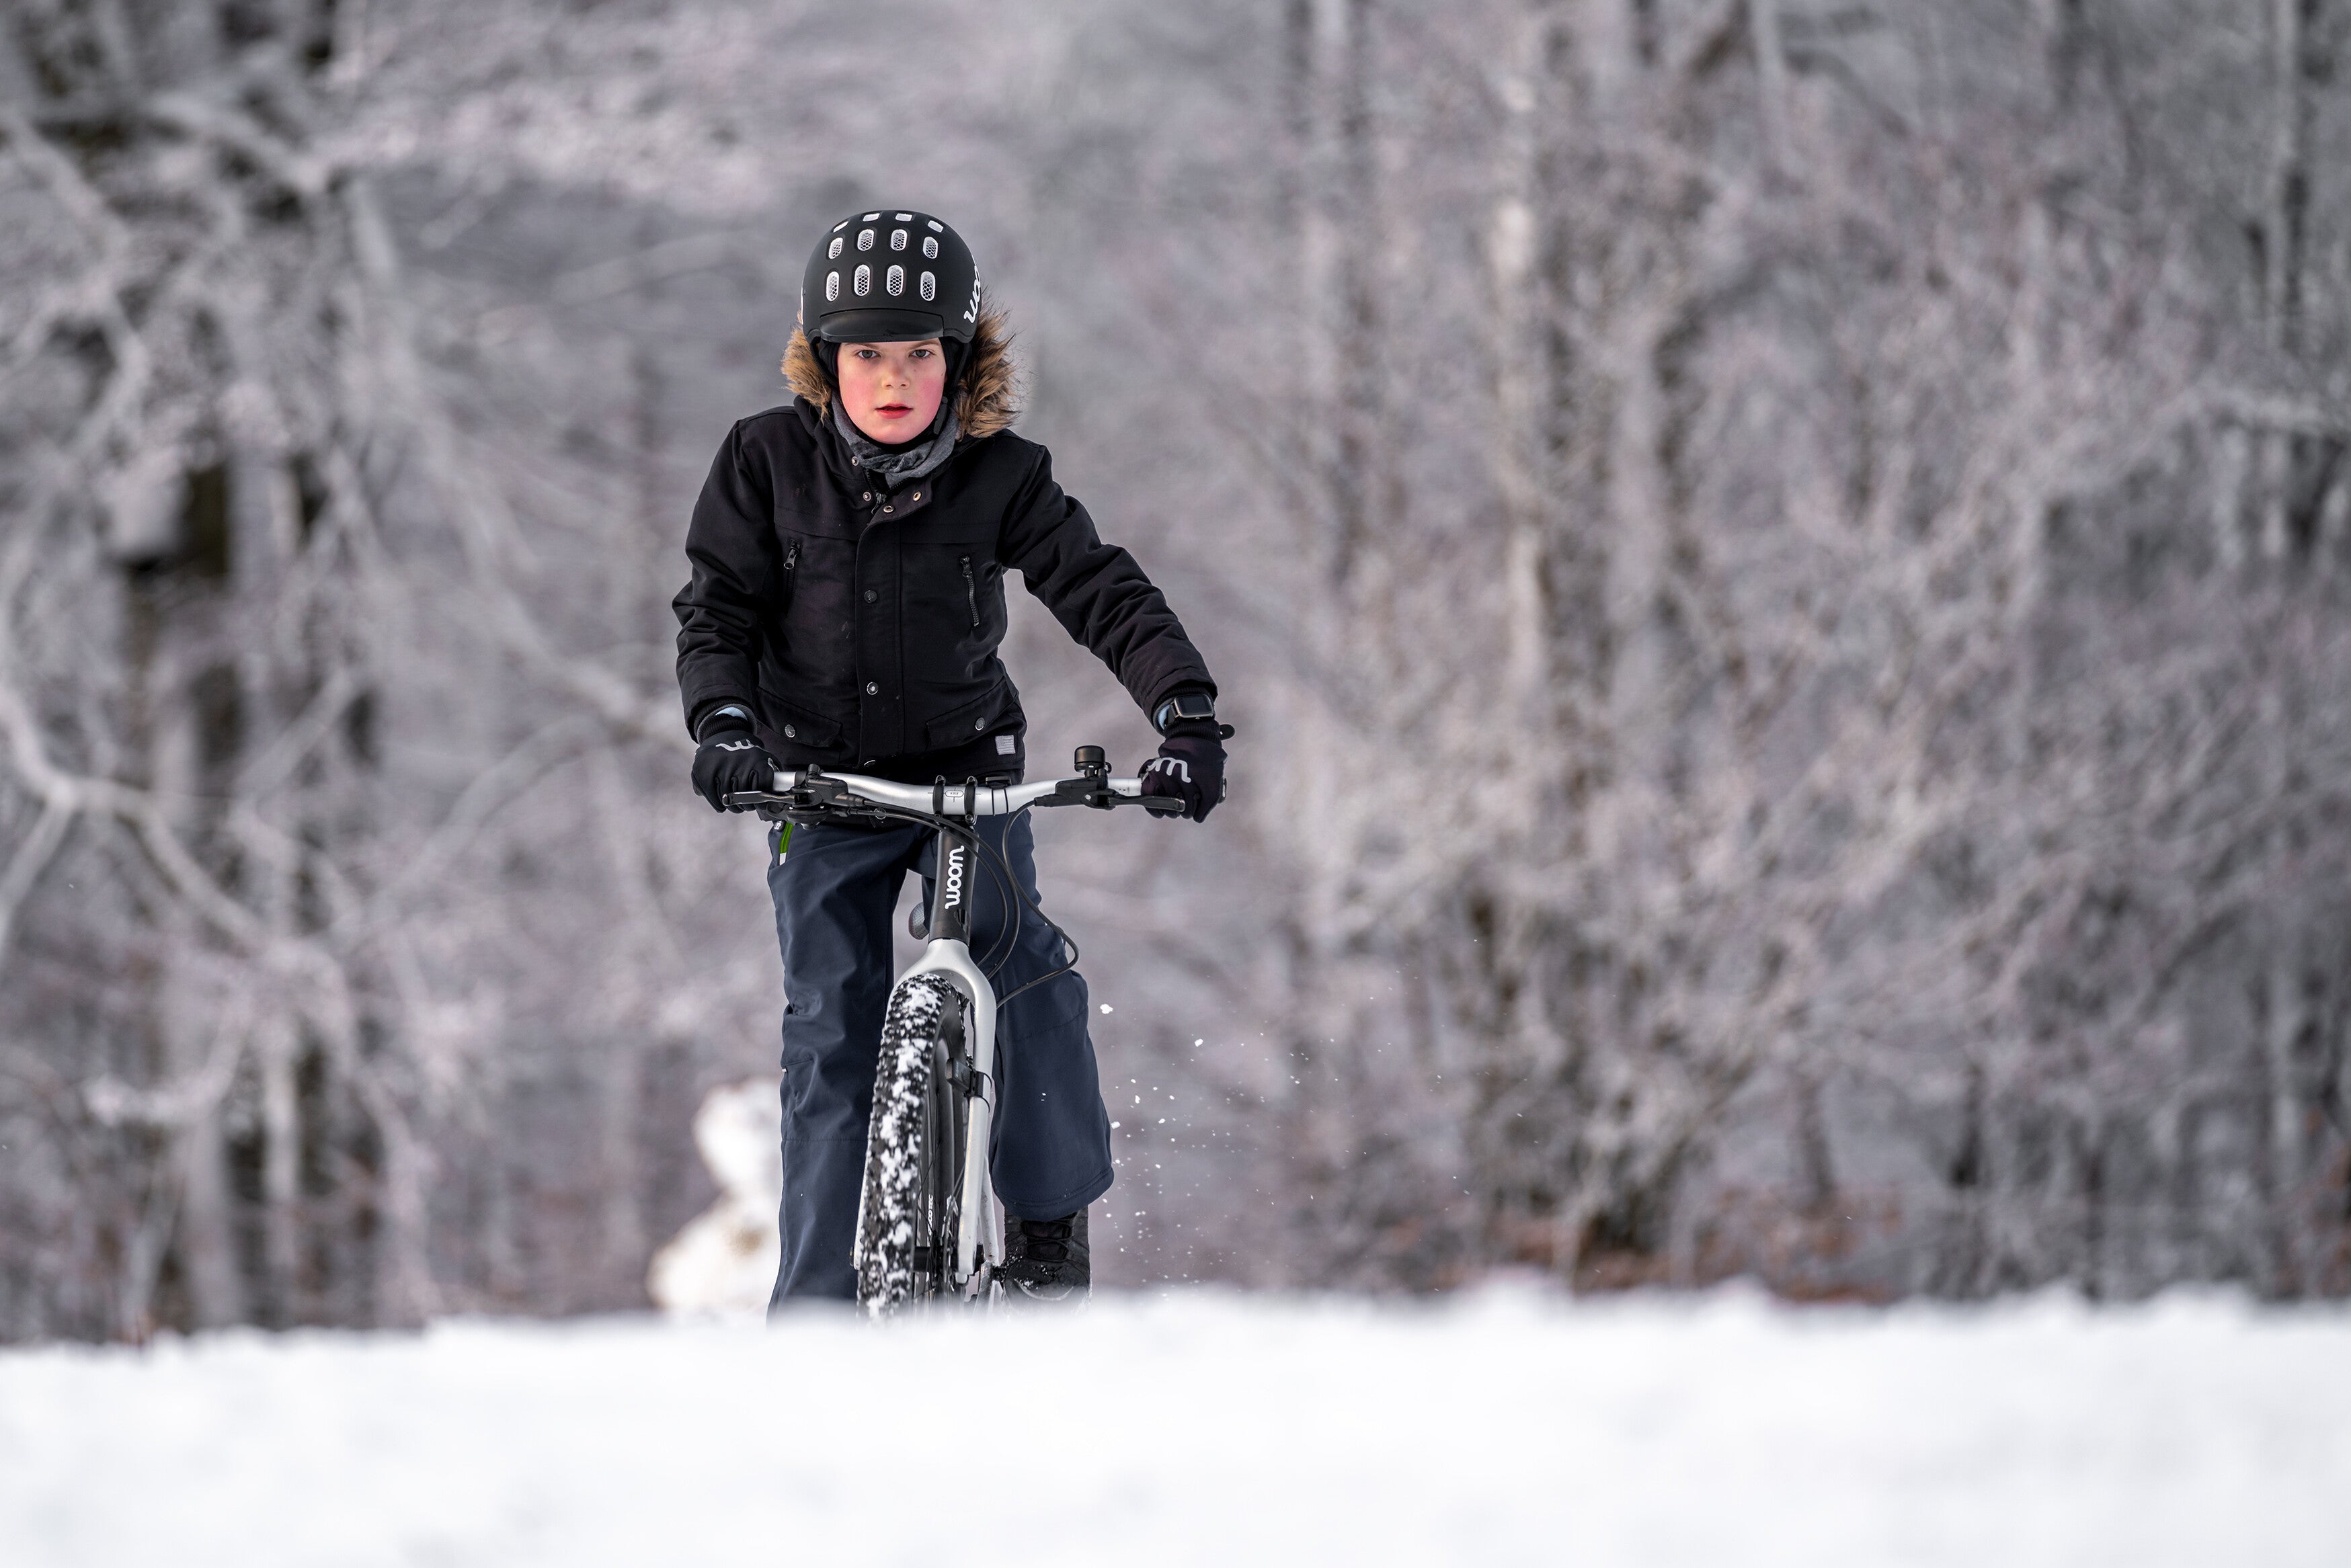 boy in snow with a woom bike